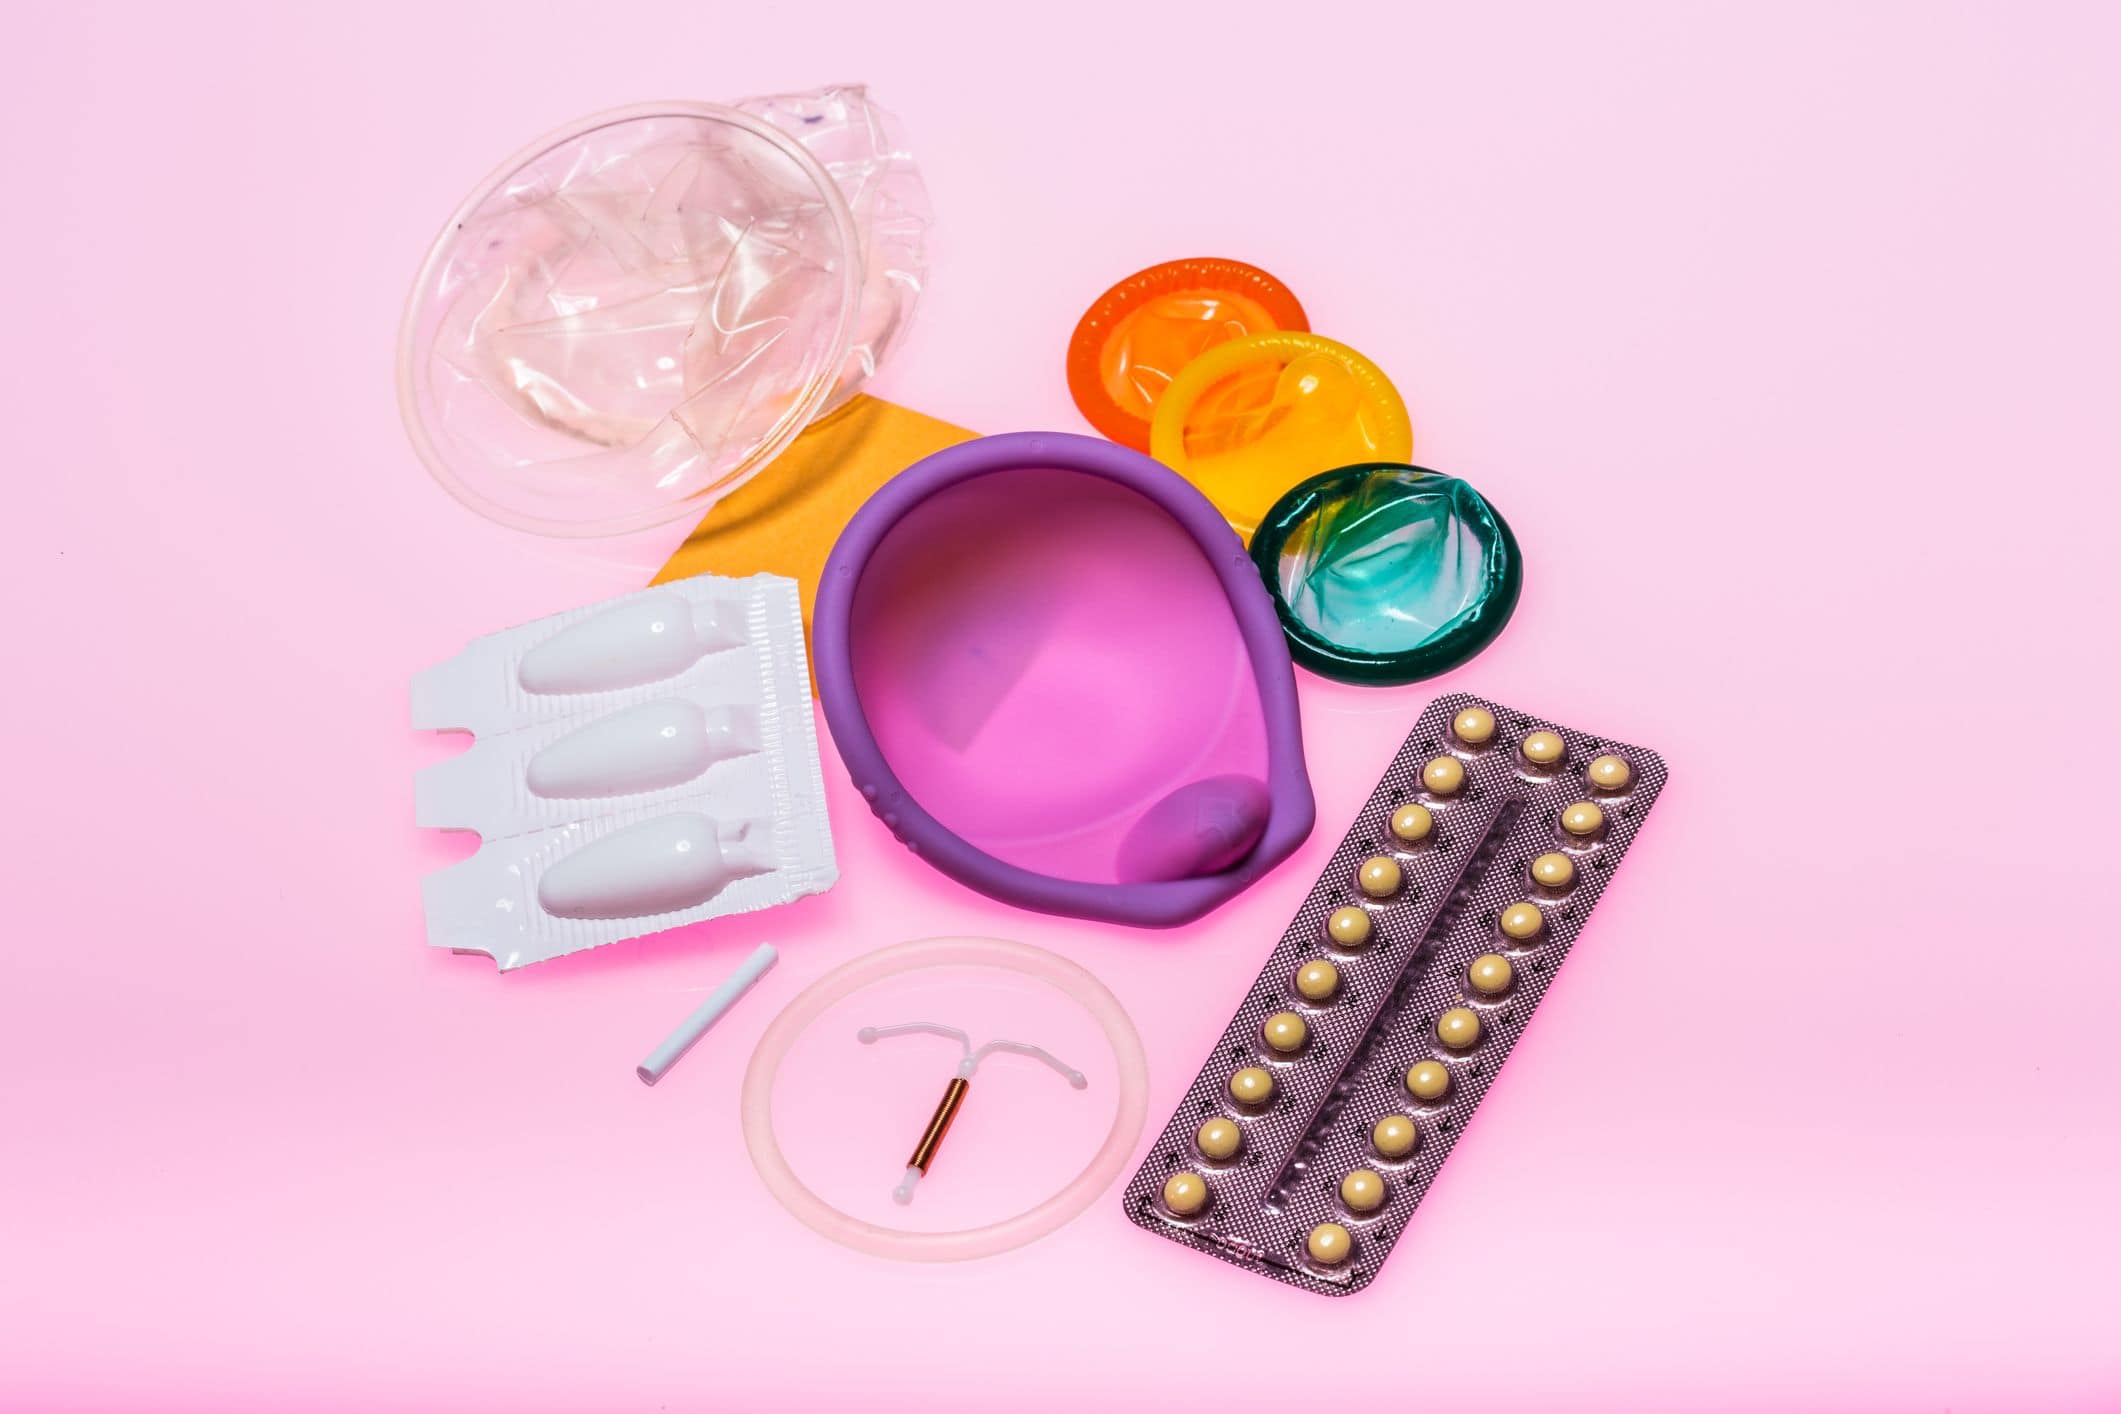 contraception methods | American Pregnancy Association